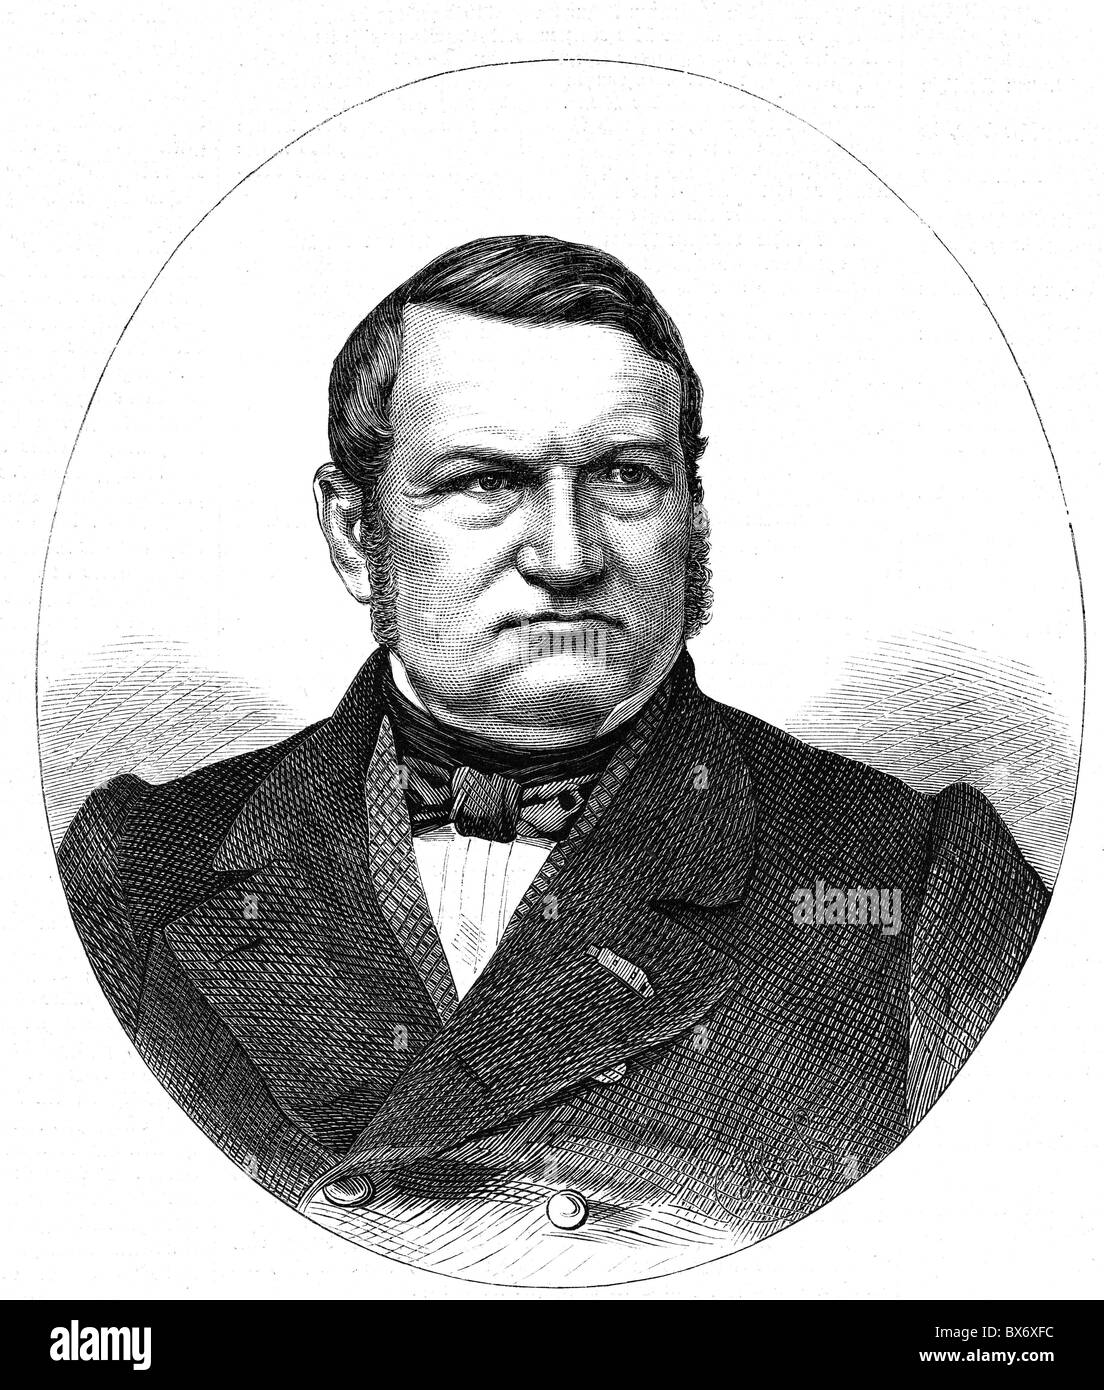 Riedinger, Ludwig August, 19.11.1809 - 20.4.1879, German entrepreneur, portrait, wood engraving, 19th century, Stock Photo